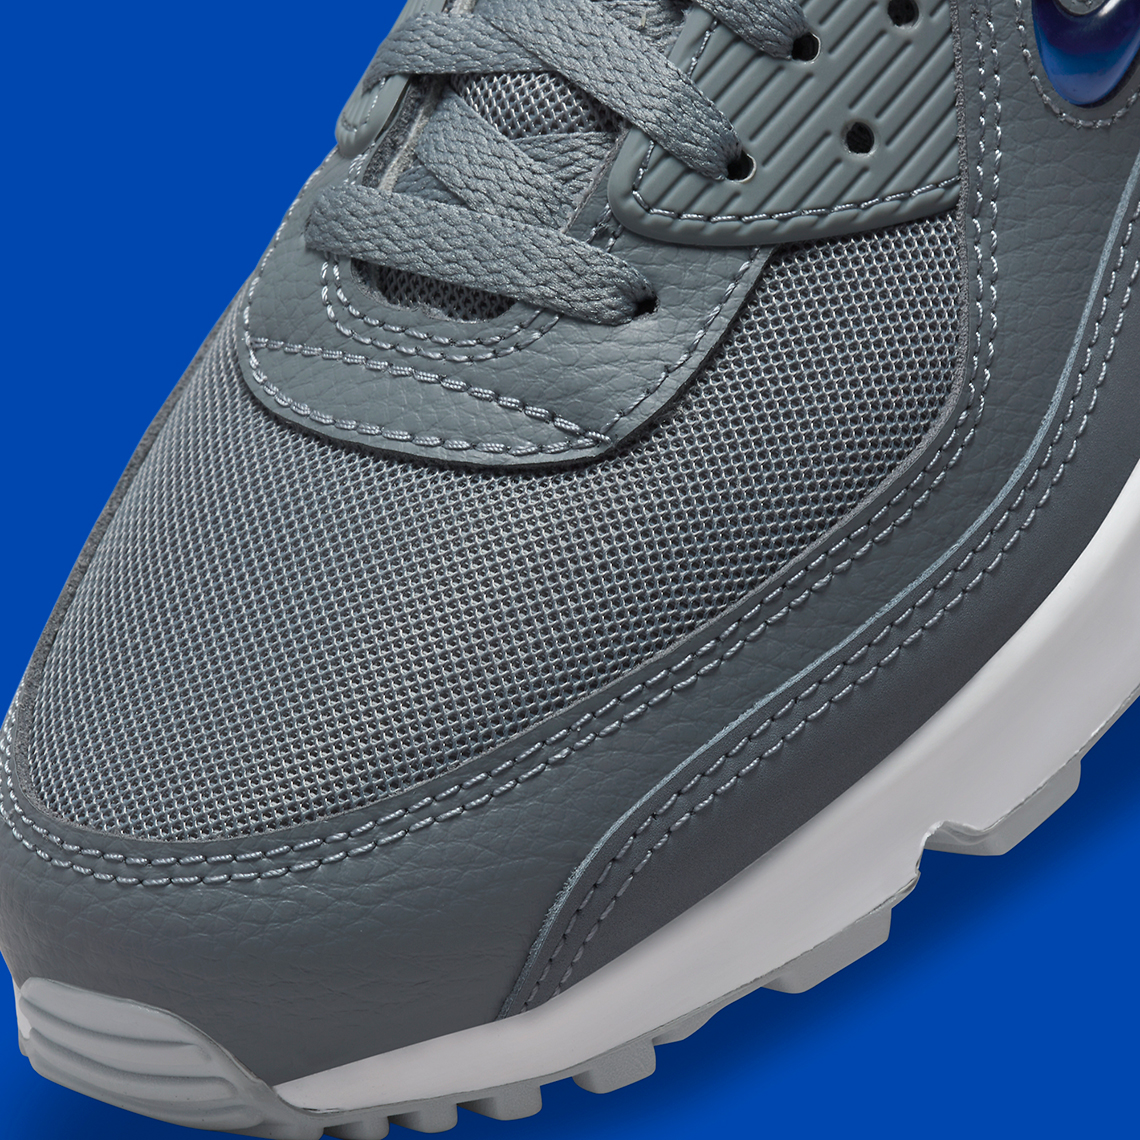 Nike Nike 32 GS Teal Volt Jewel Grey Royal Blue Fn8005 001 5